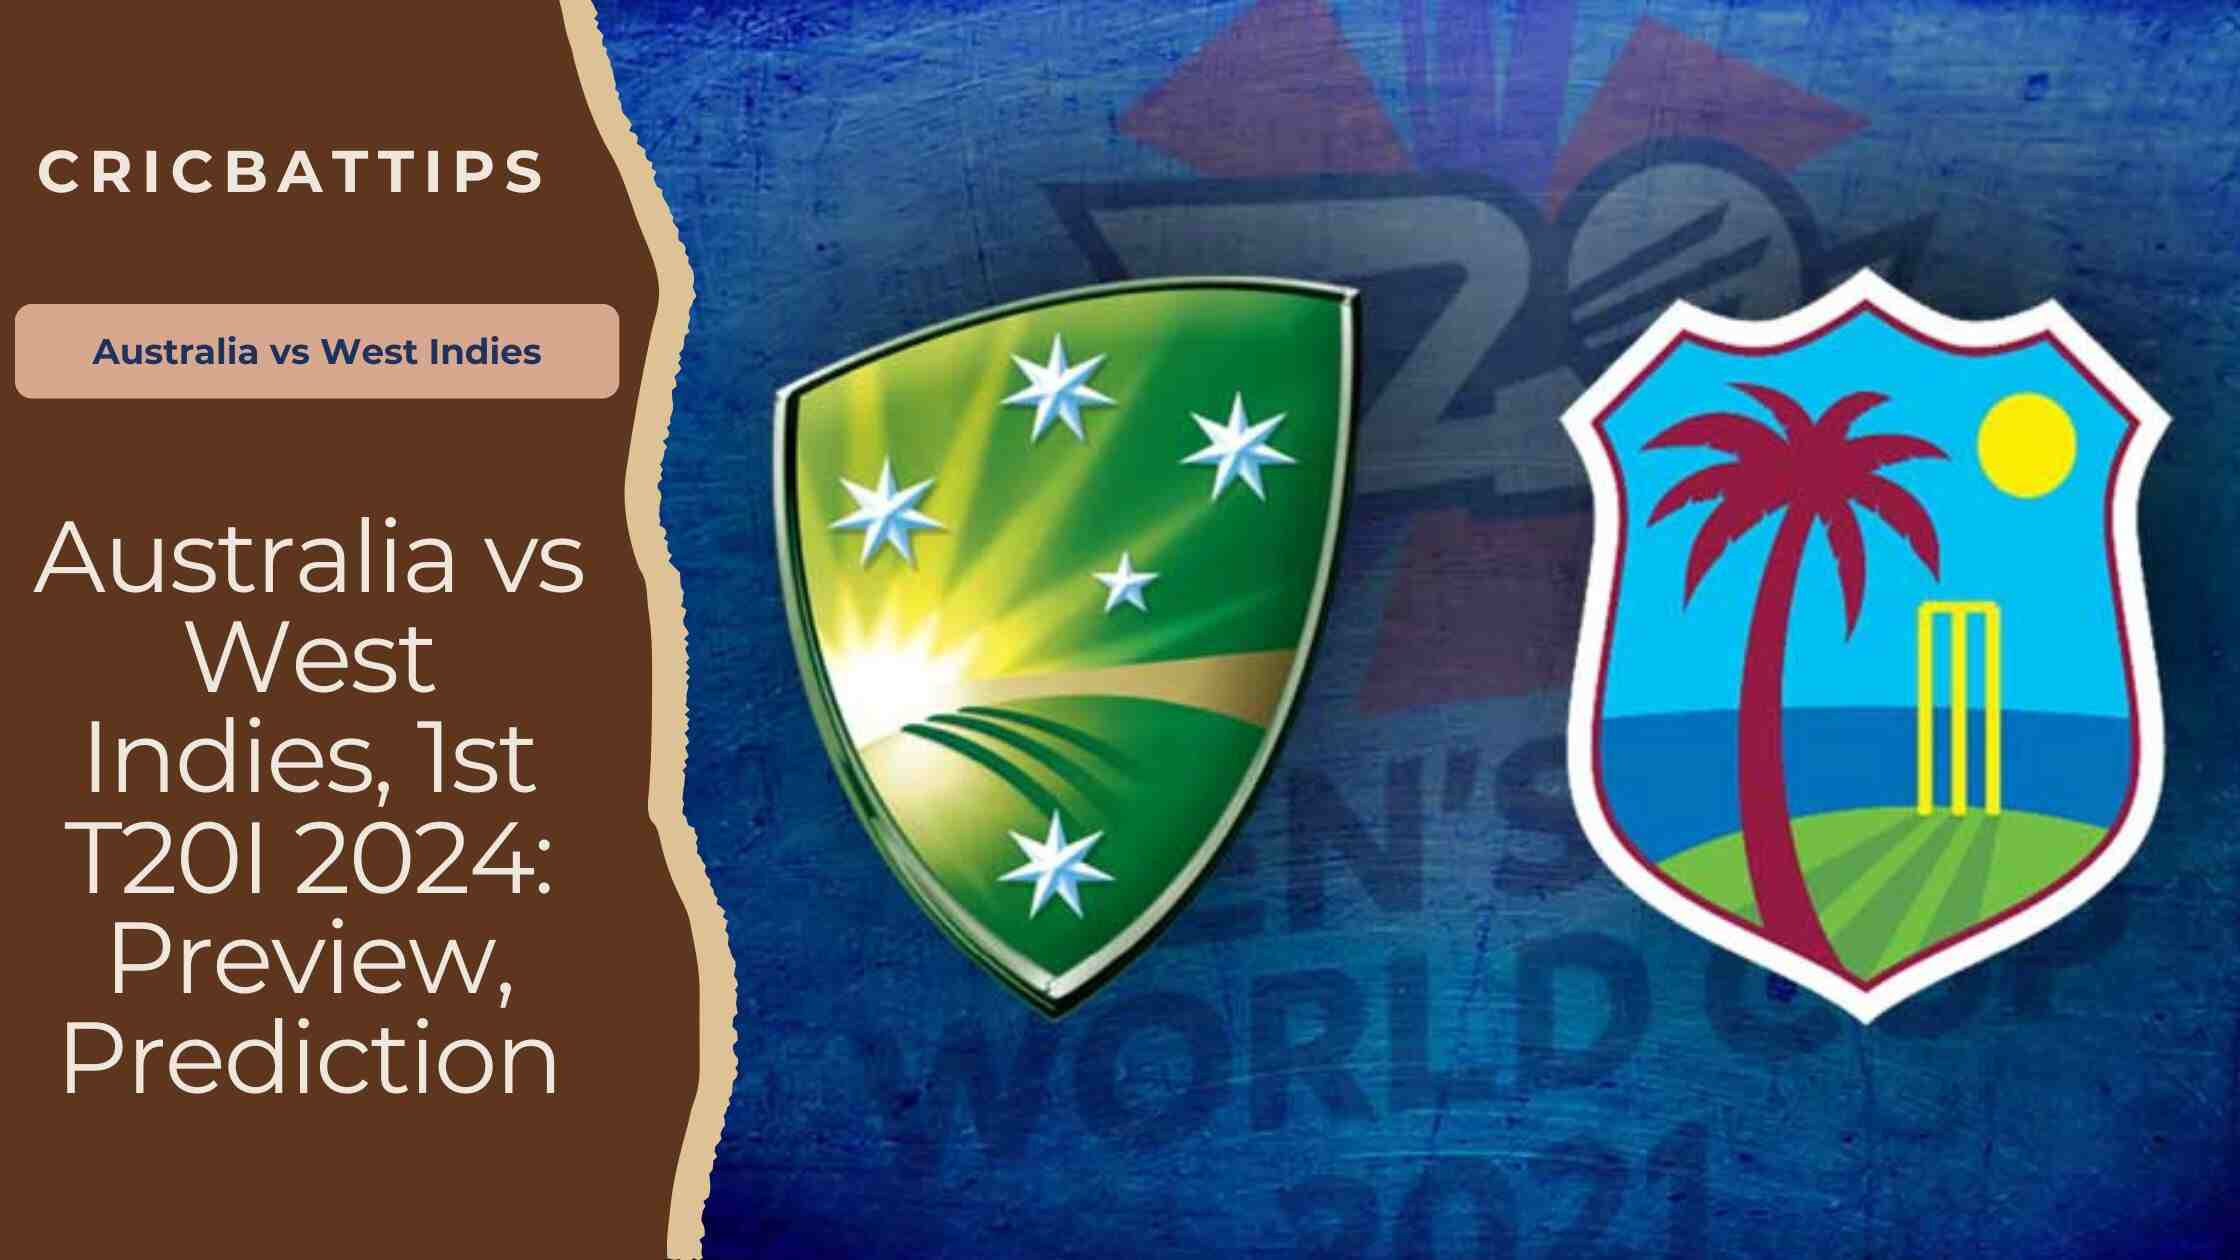 Australia vs West Indies, 1st T20I 2024